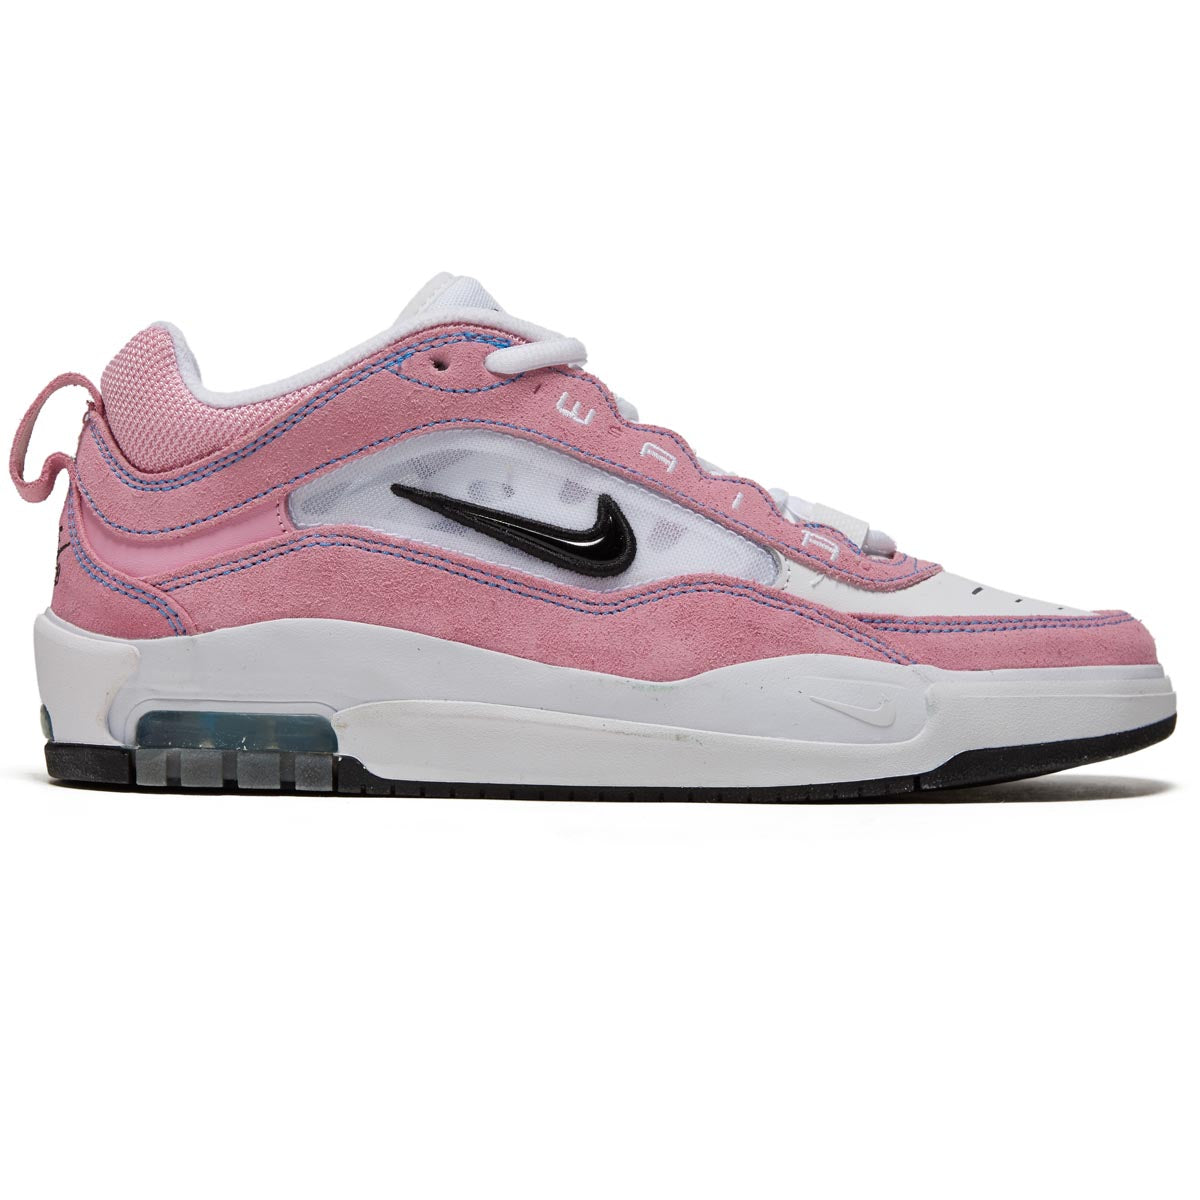 Nike SB Air Max Ishod Shoes - Pink Foam /Black/White/Light Photo Blue image 1